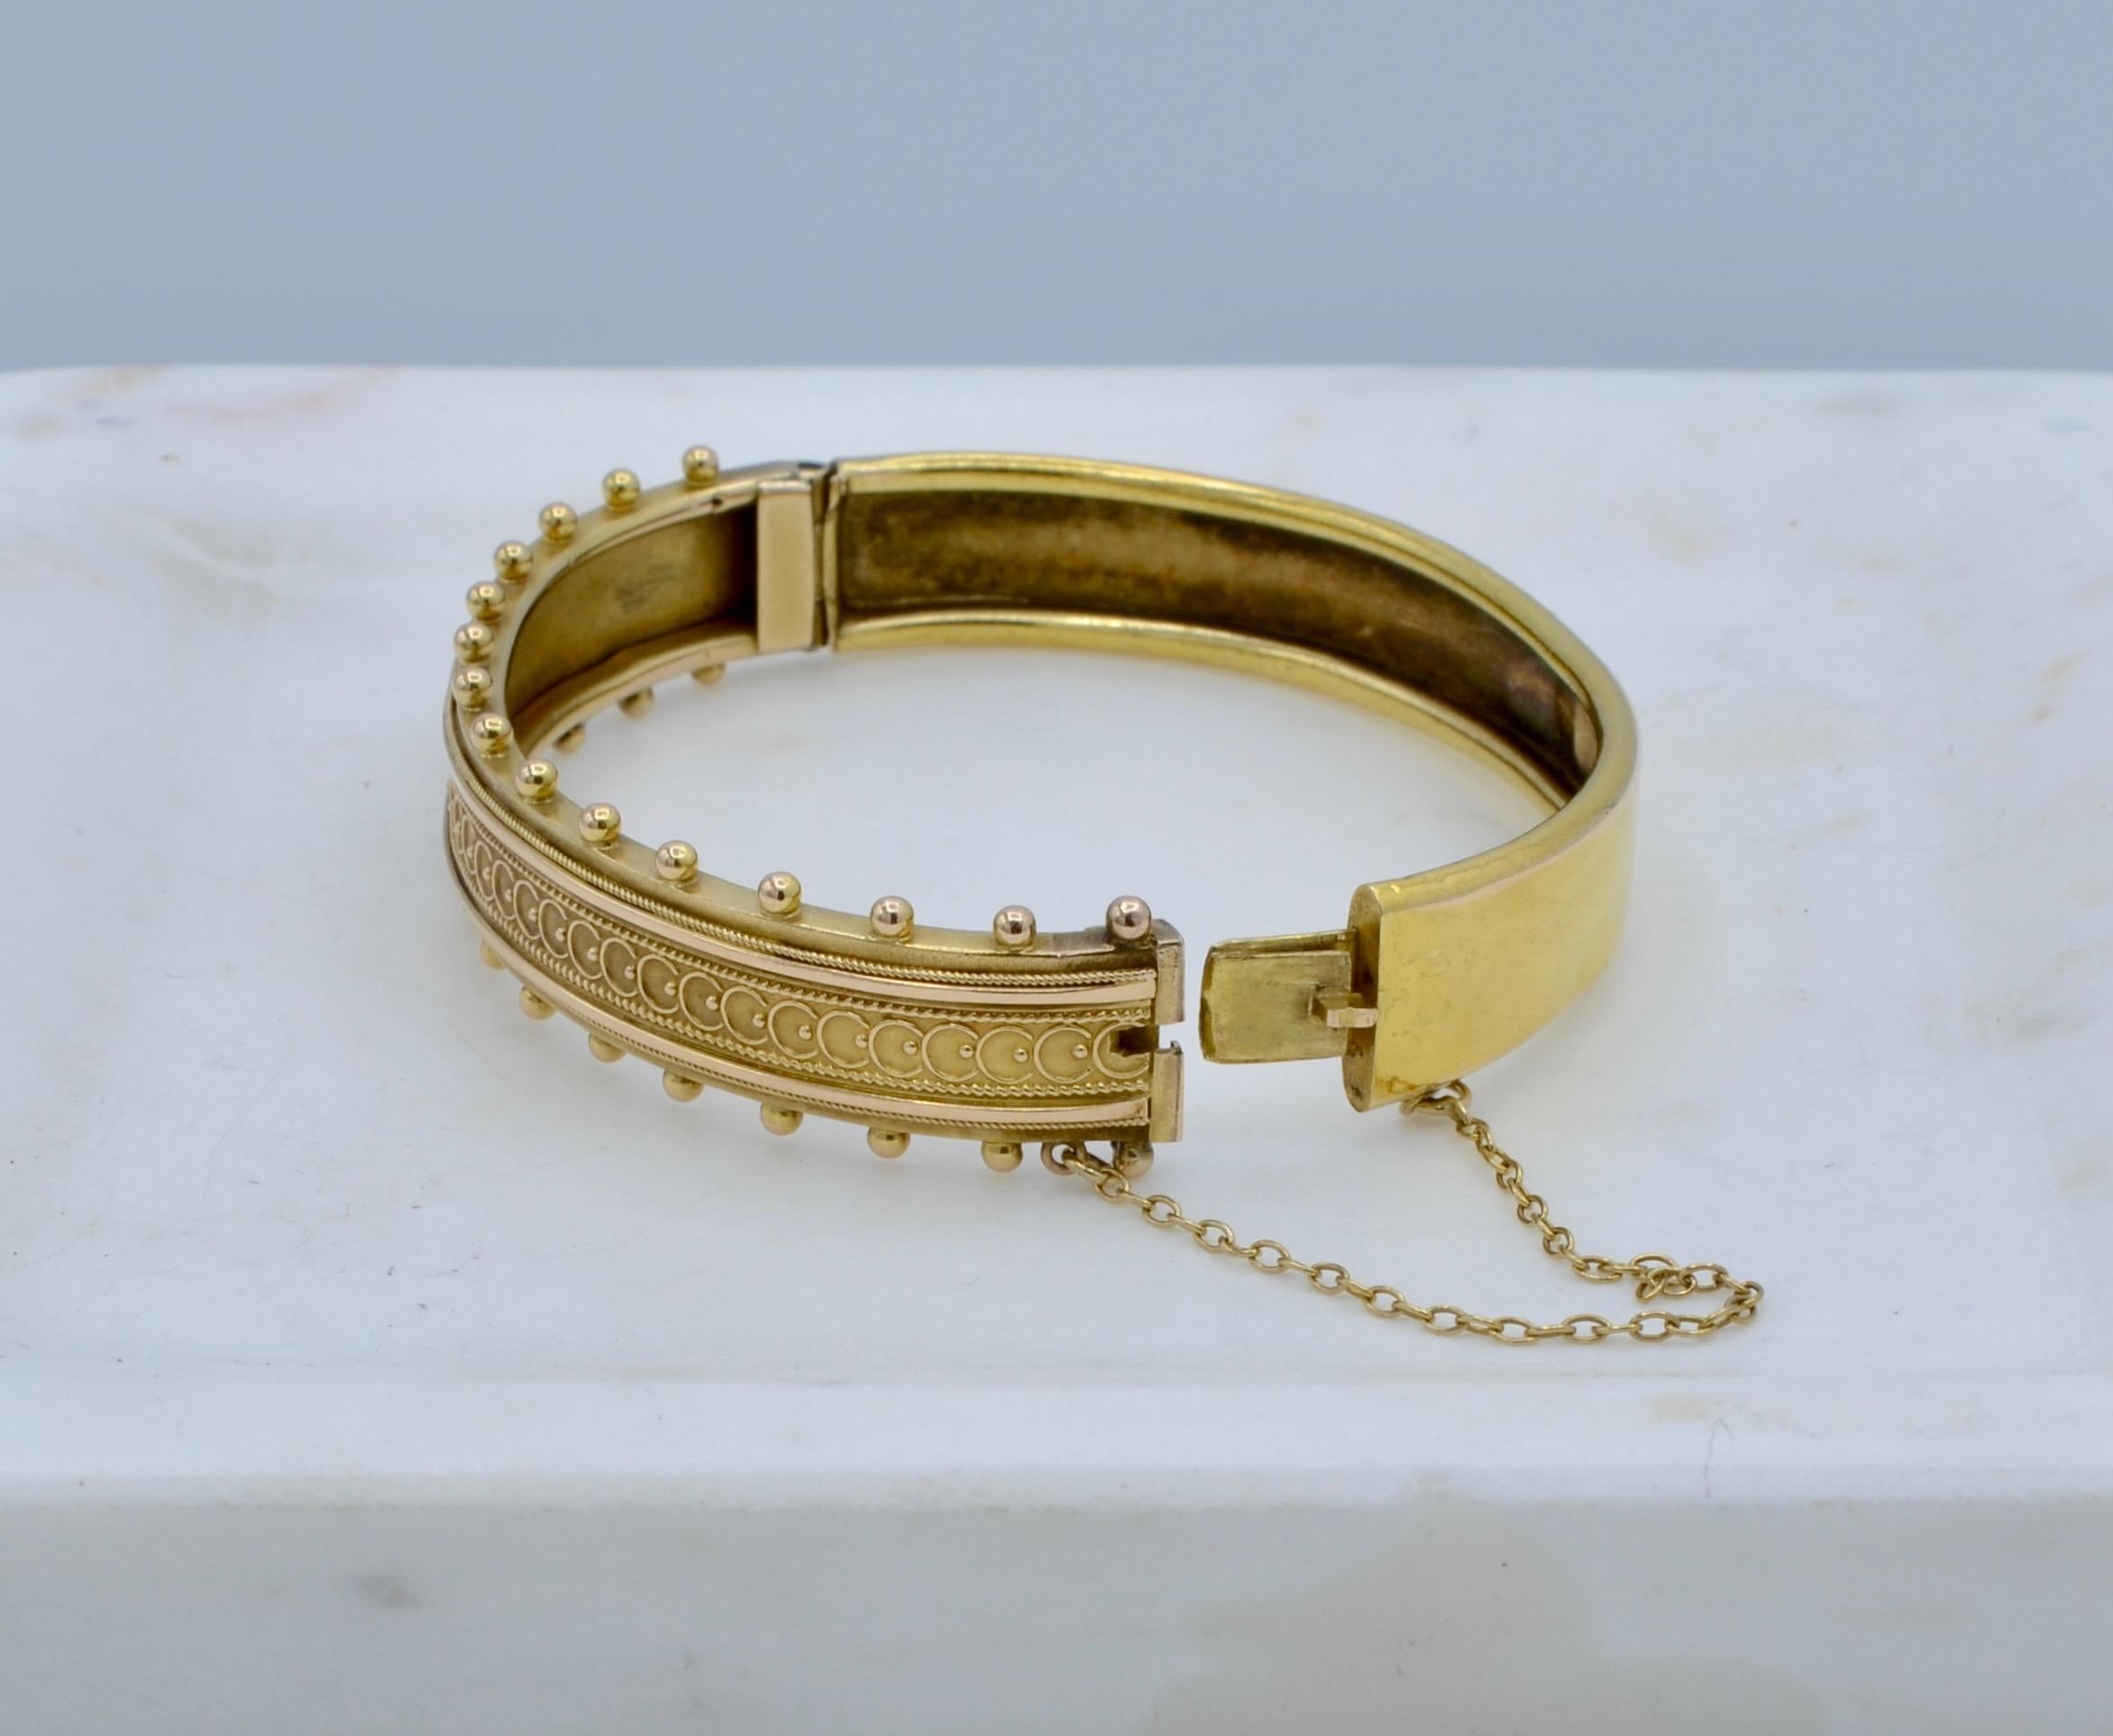 Late Victorian Ornate Victorian Bangle Bracelet in 14 Carat Gold